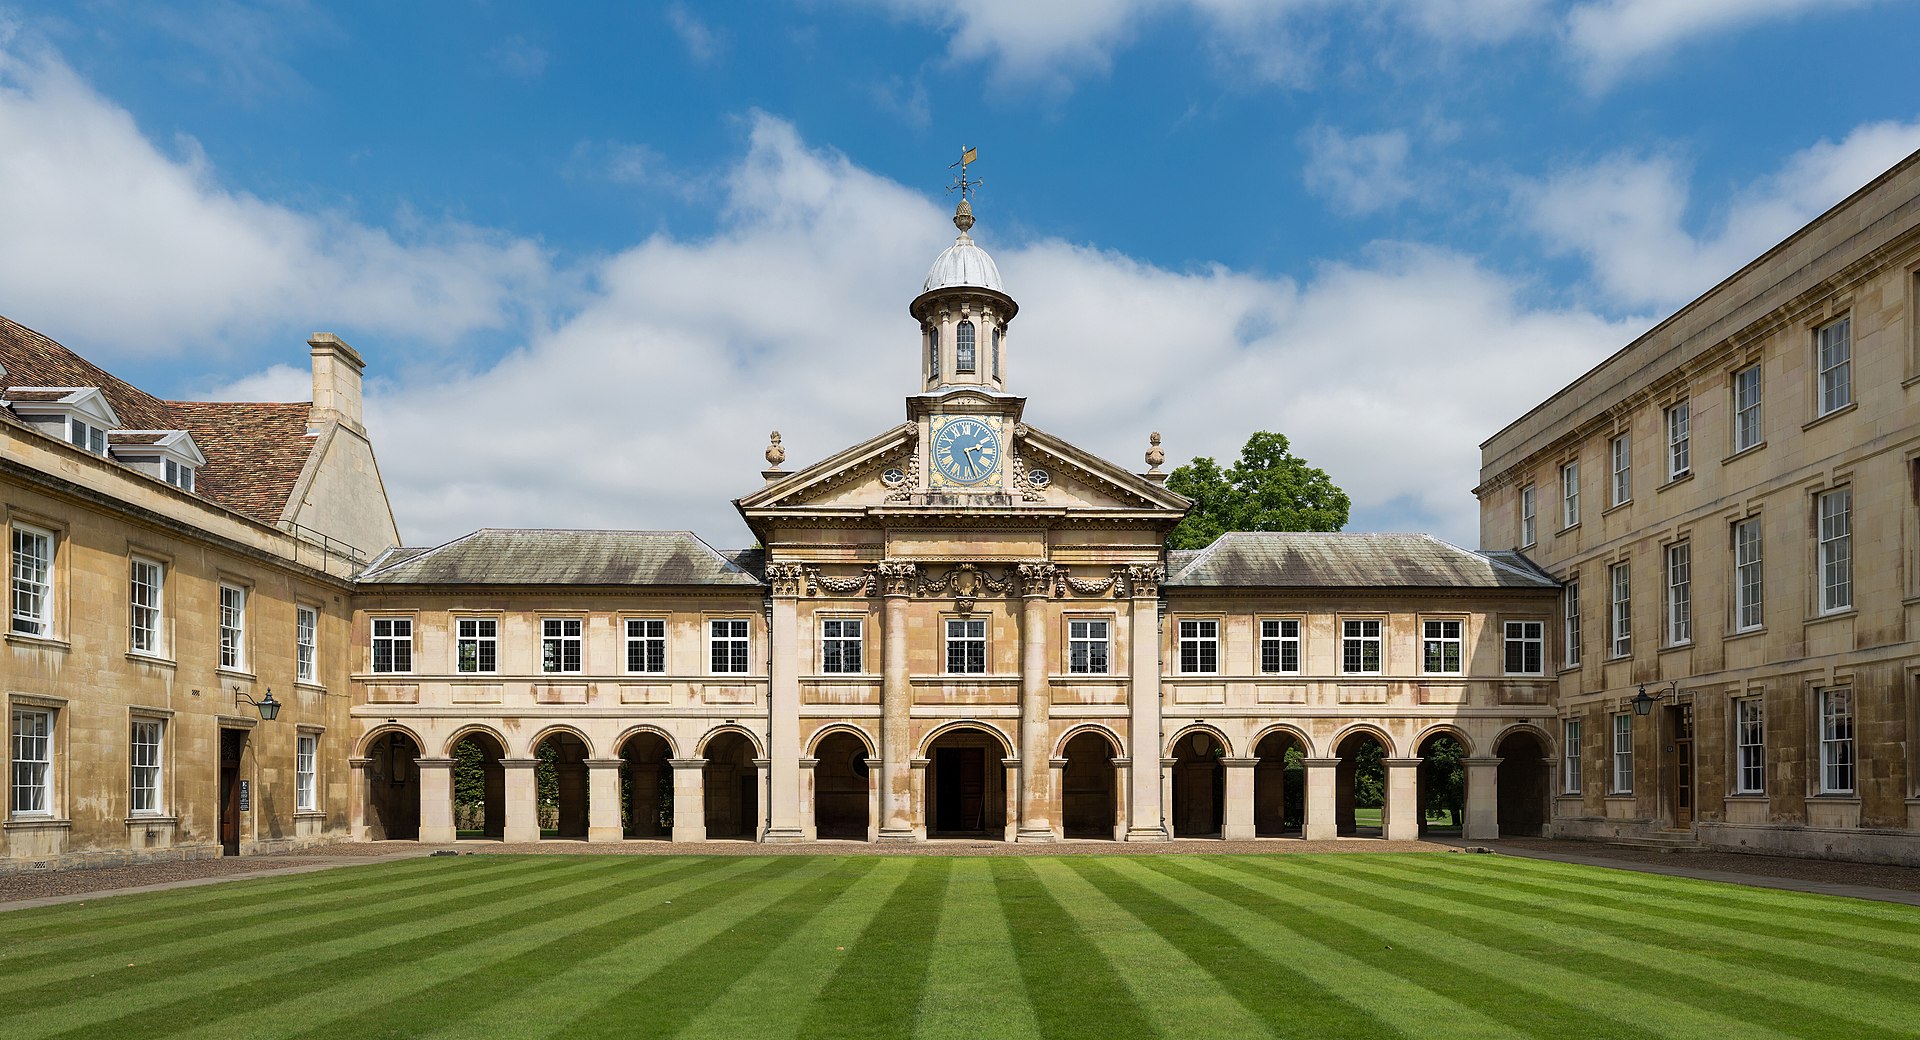 A wonderful day in Cambridge University